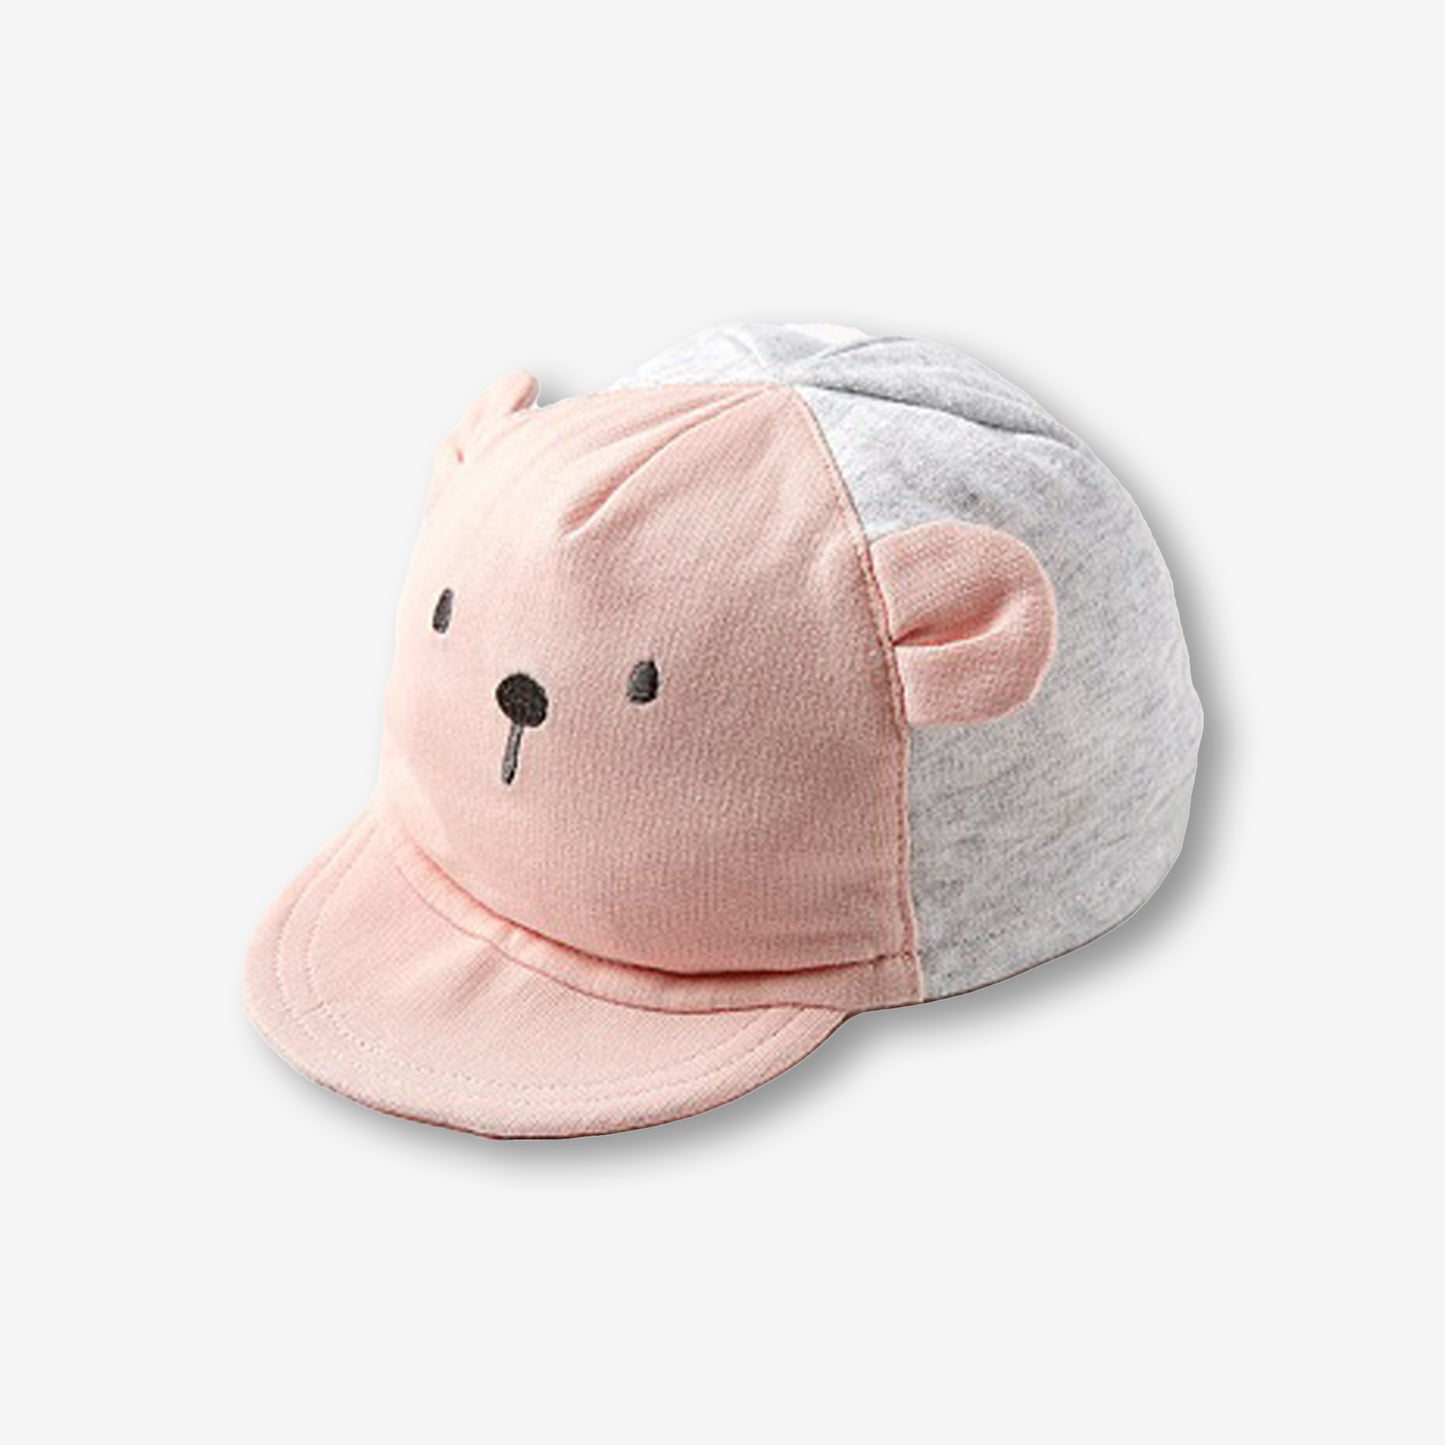 CAP帽-淺粉紅色/小熊圖案